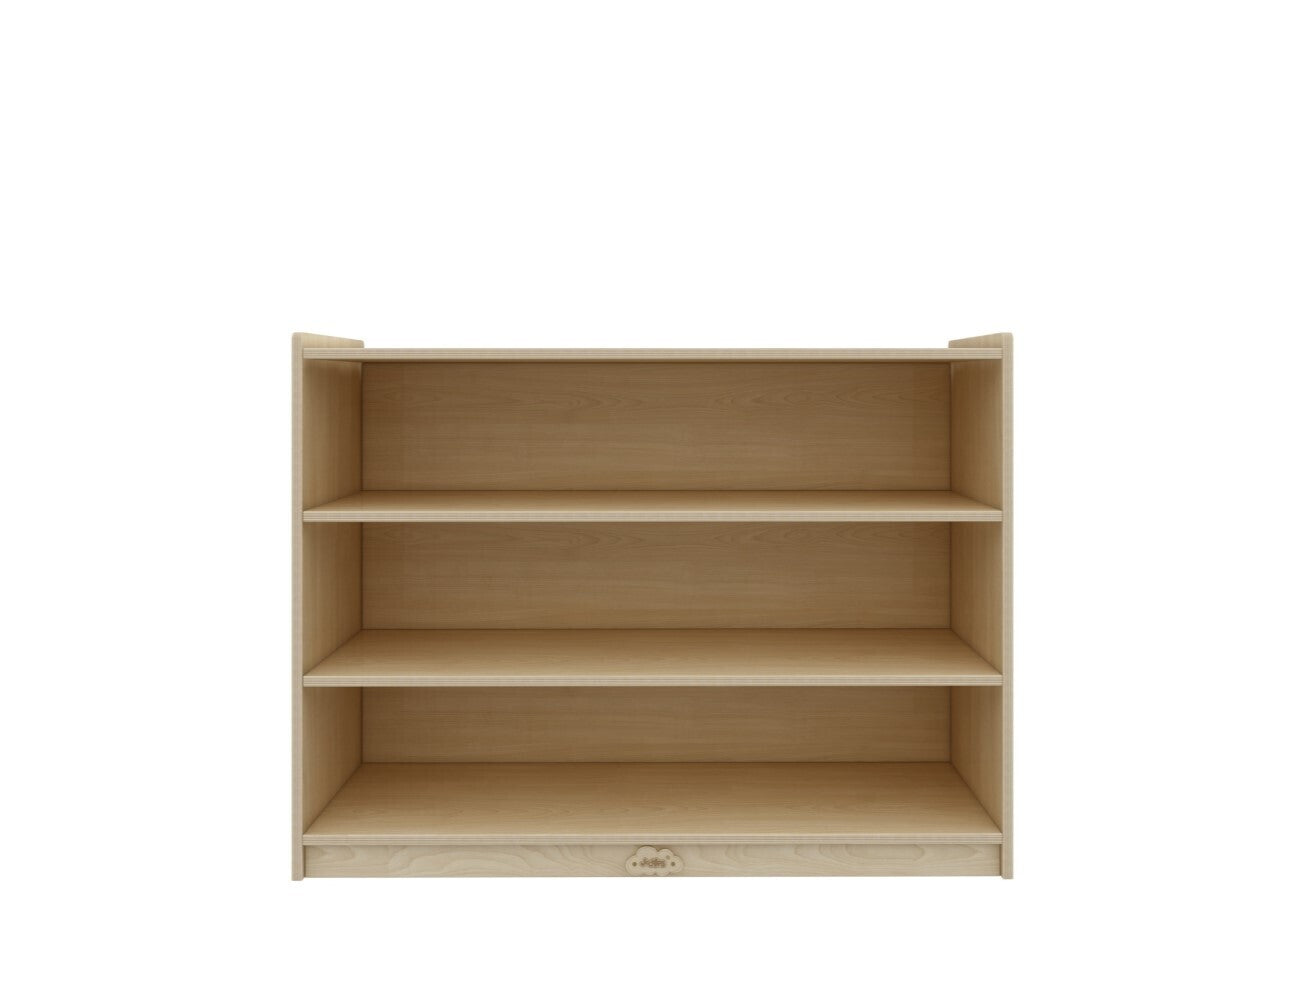 Jooyes Kids 3 Shelf Wooden Bookcase Organiser Storage - H76cm